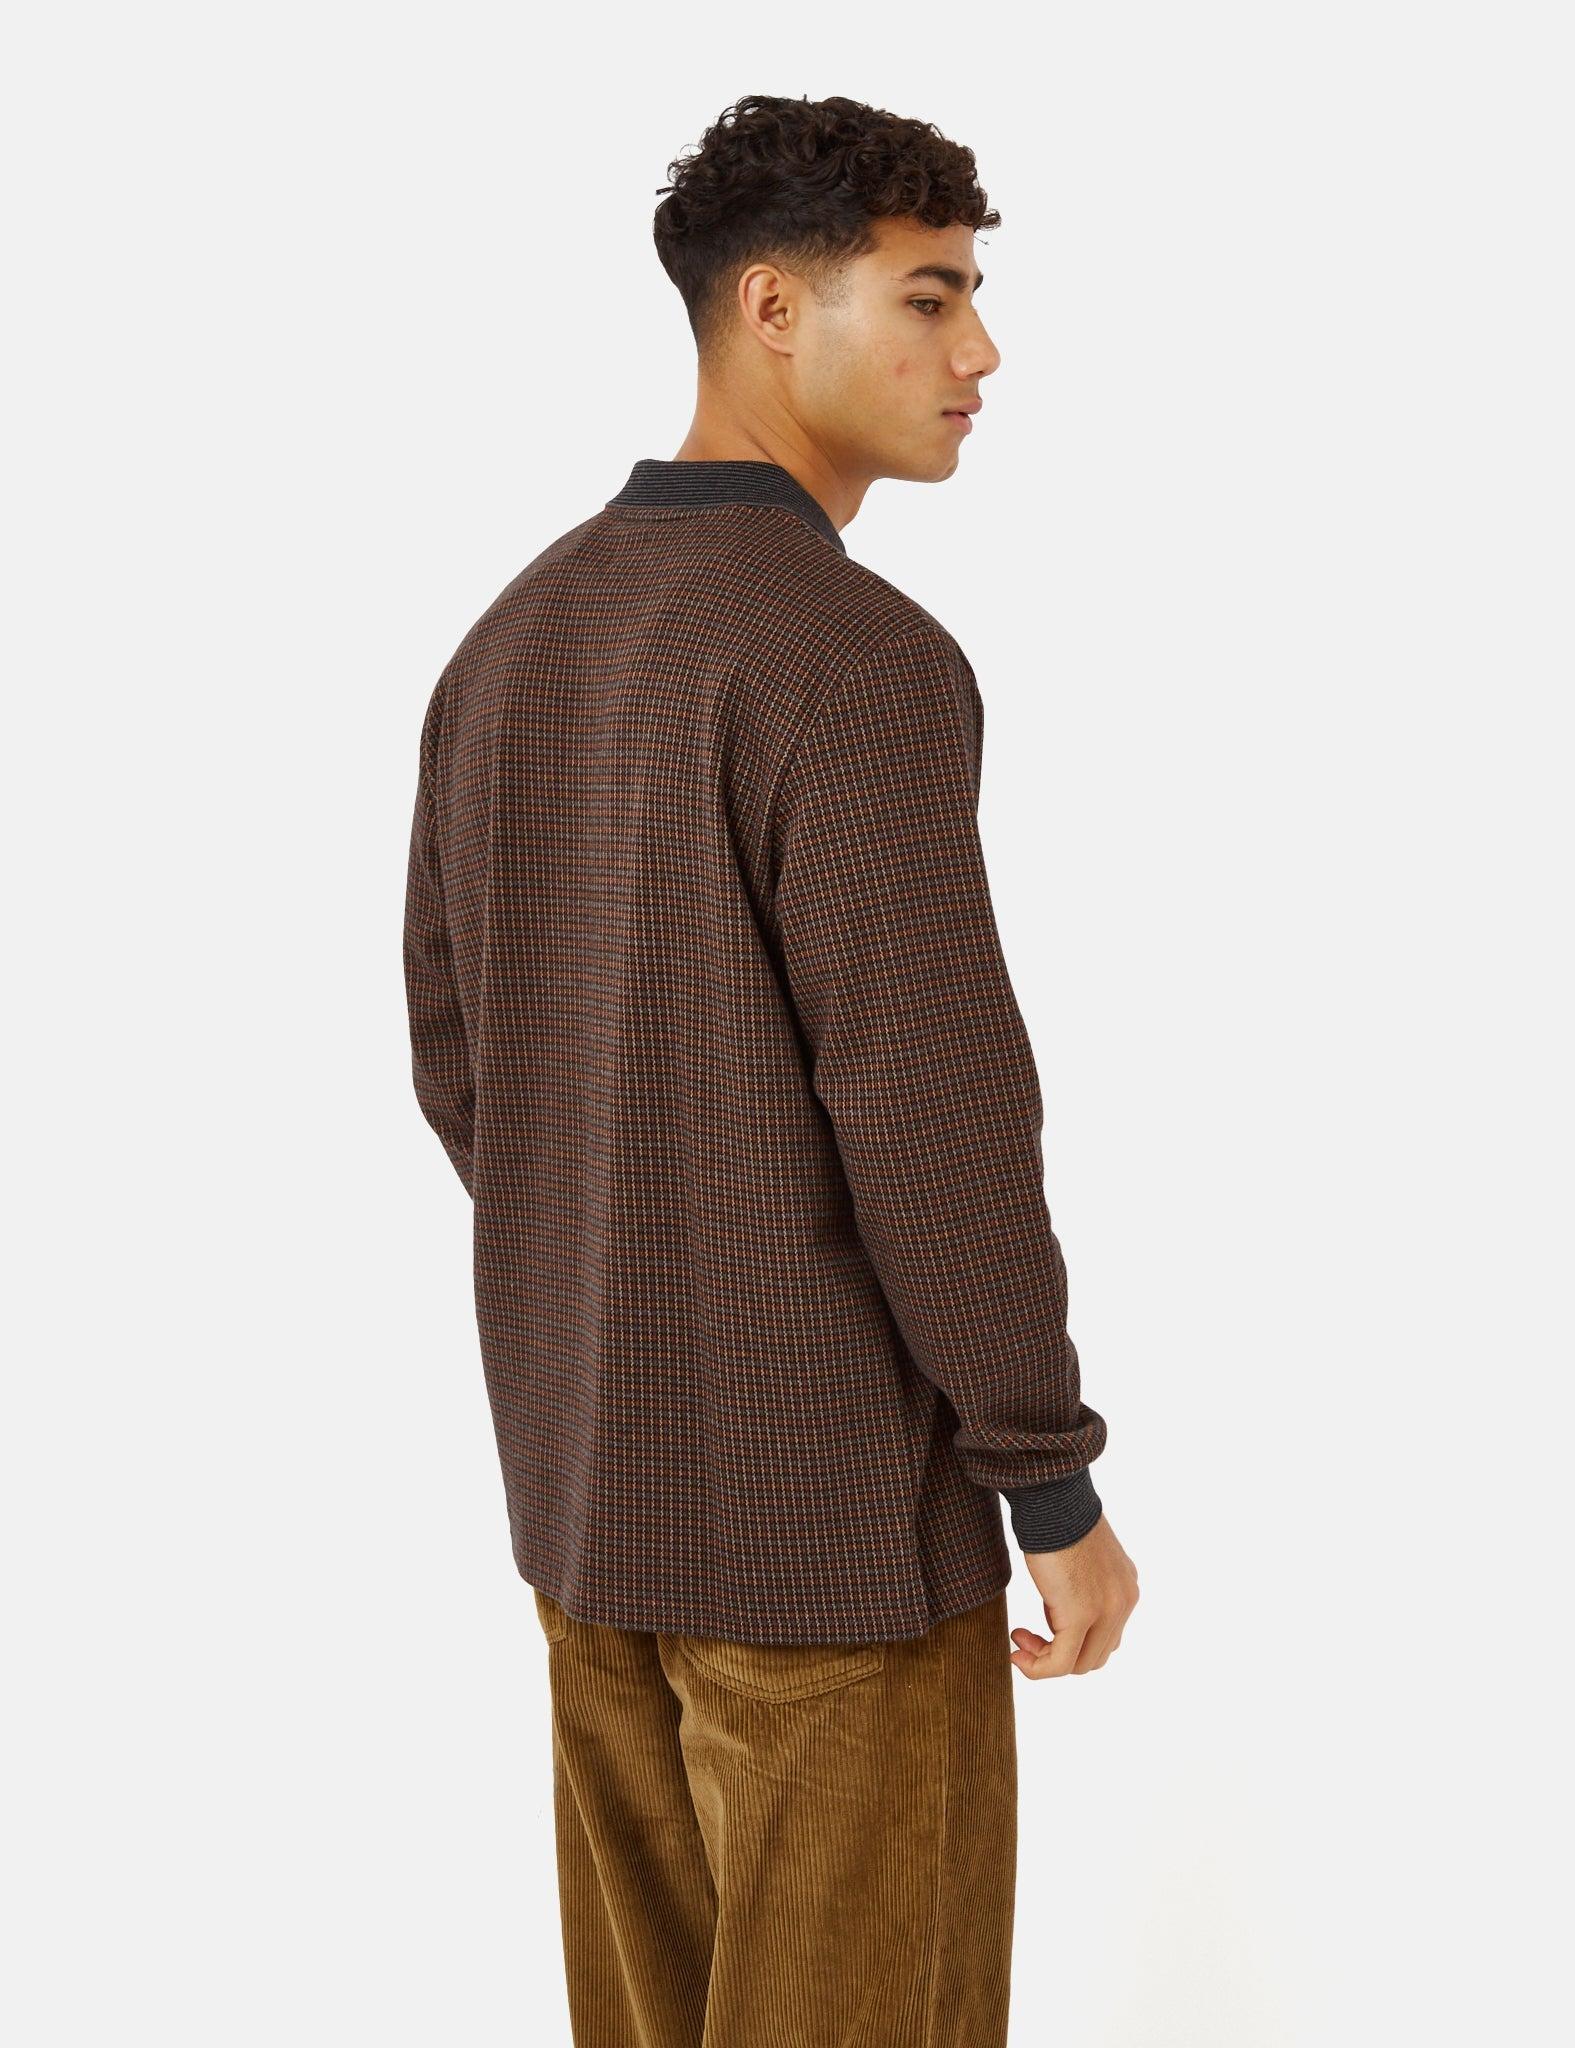 Polar Skate Co. Jacques Polo Long Sleeve Shirt in Brown for Men 